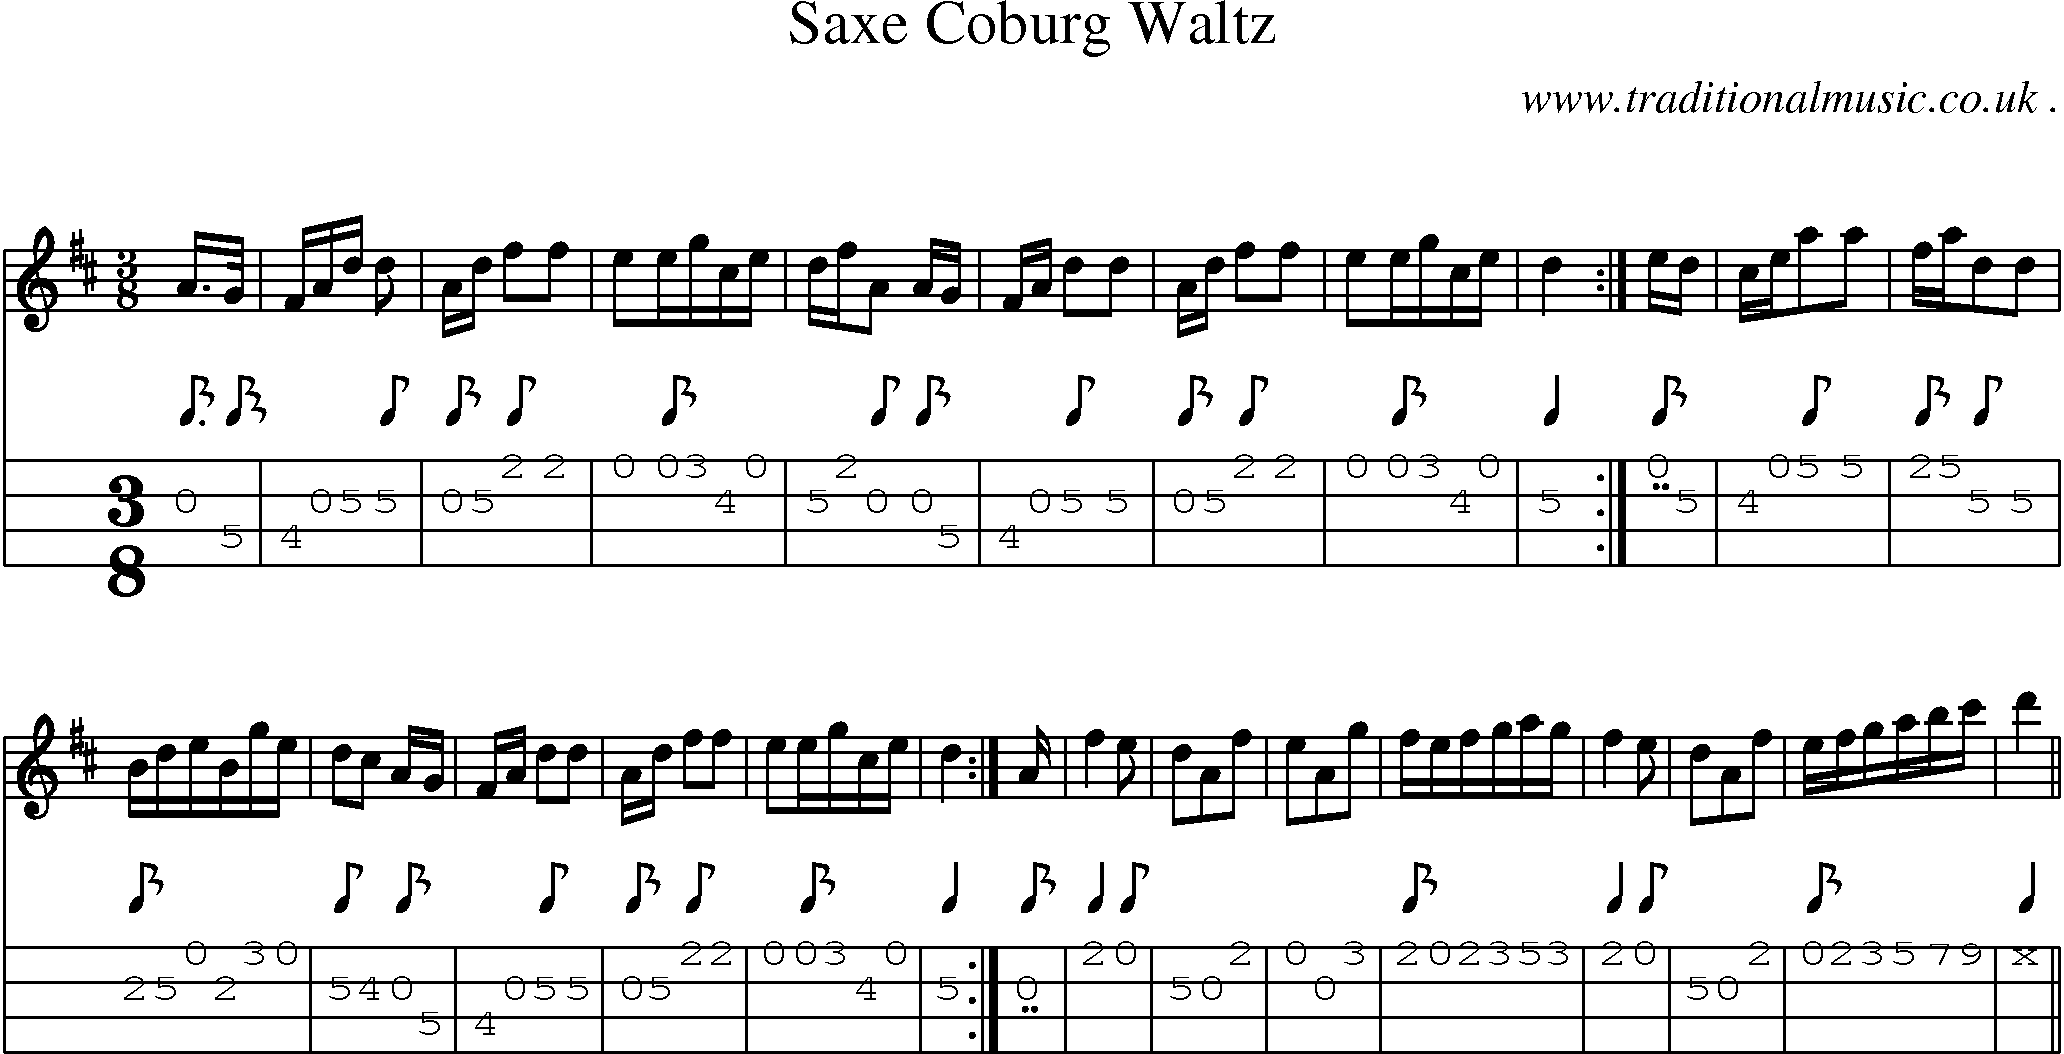 Sheet-Music and Mandolin Tabs for Saxe Coburg Waltz